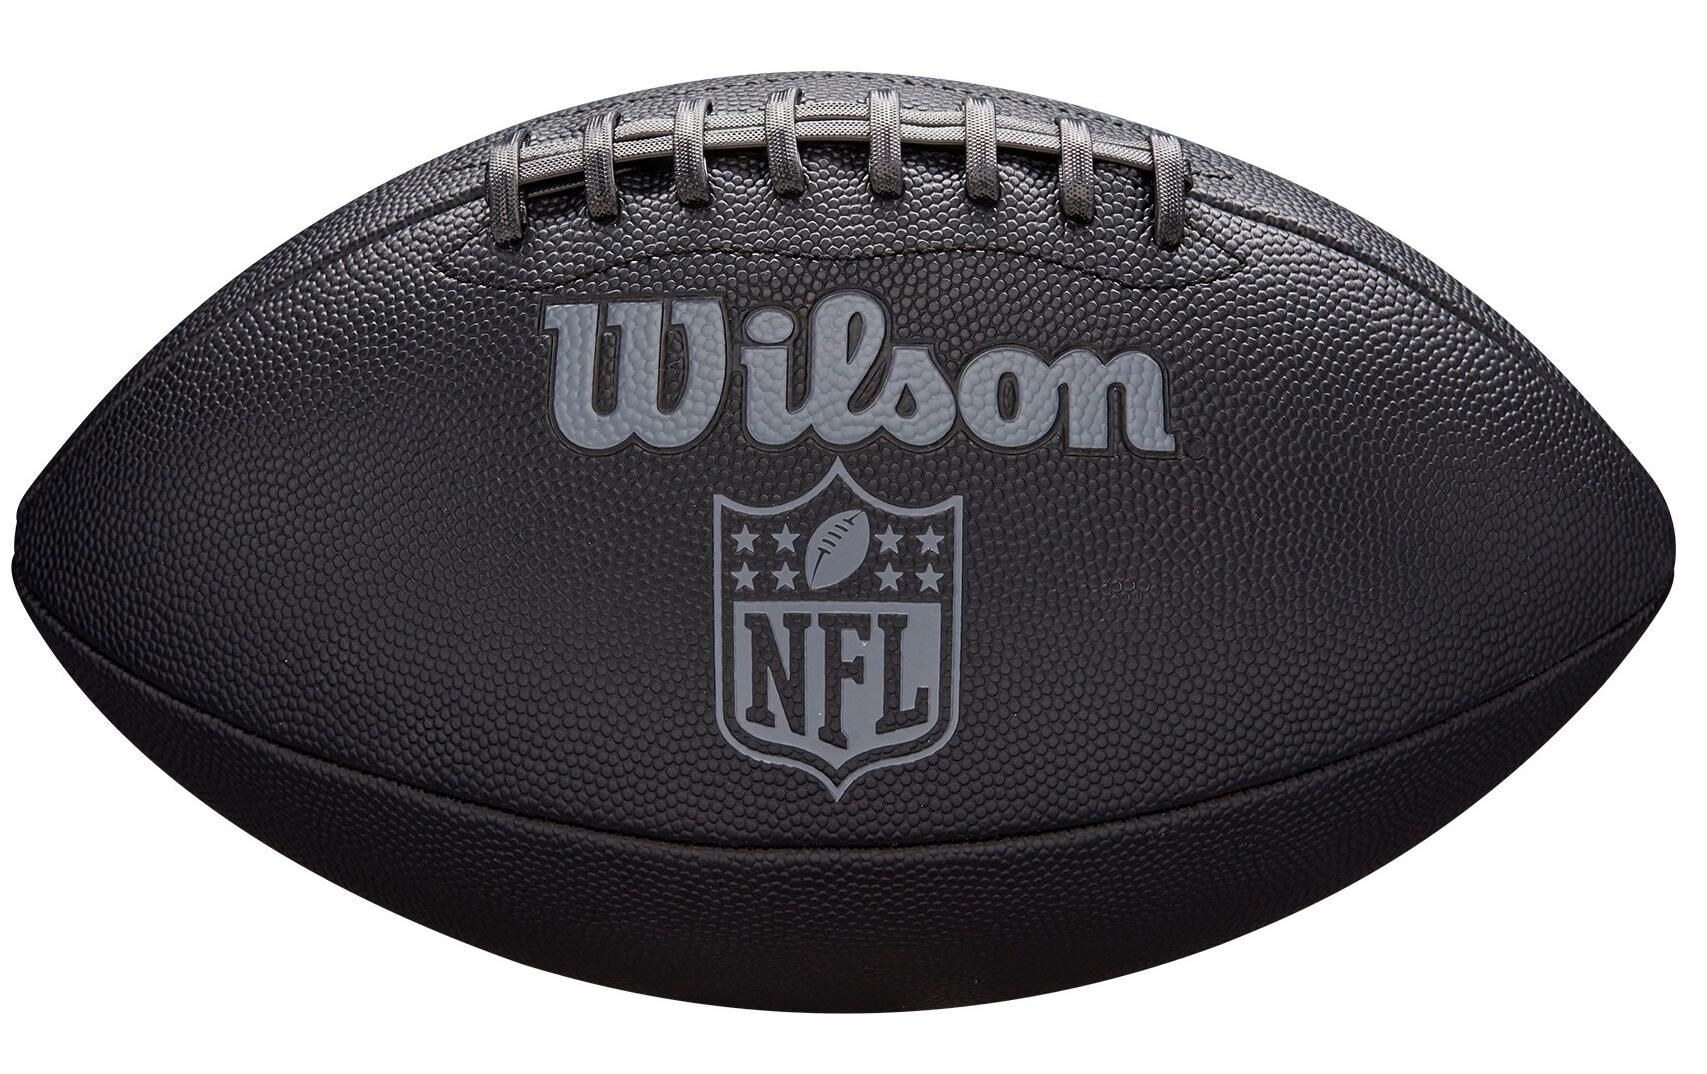 Wilson Football »NFL Jet« schwarz